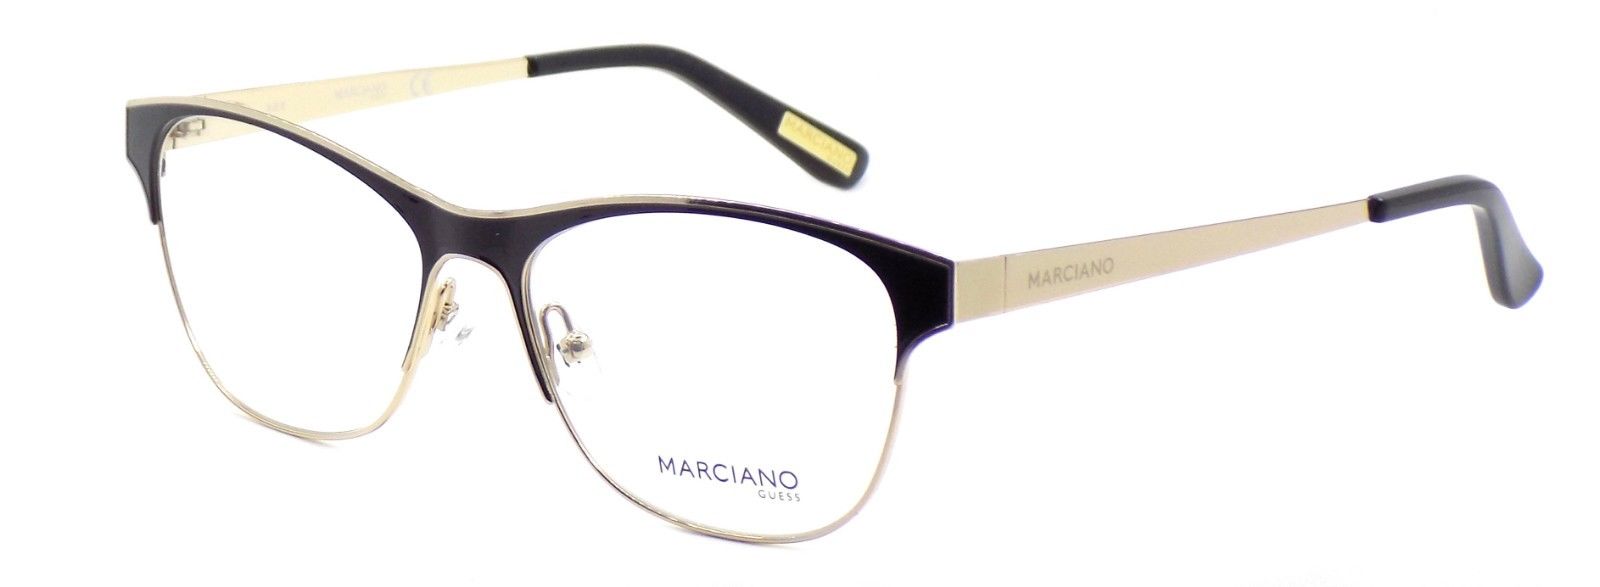 1-GUESS by Marciano GM0278 005 Women's Eyeglasses Frames 53-15-135 Shiny Black-664689773015-IKSpecs